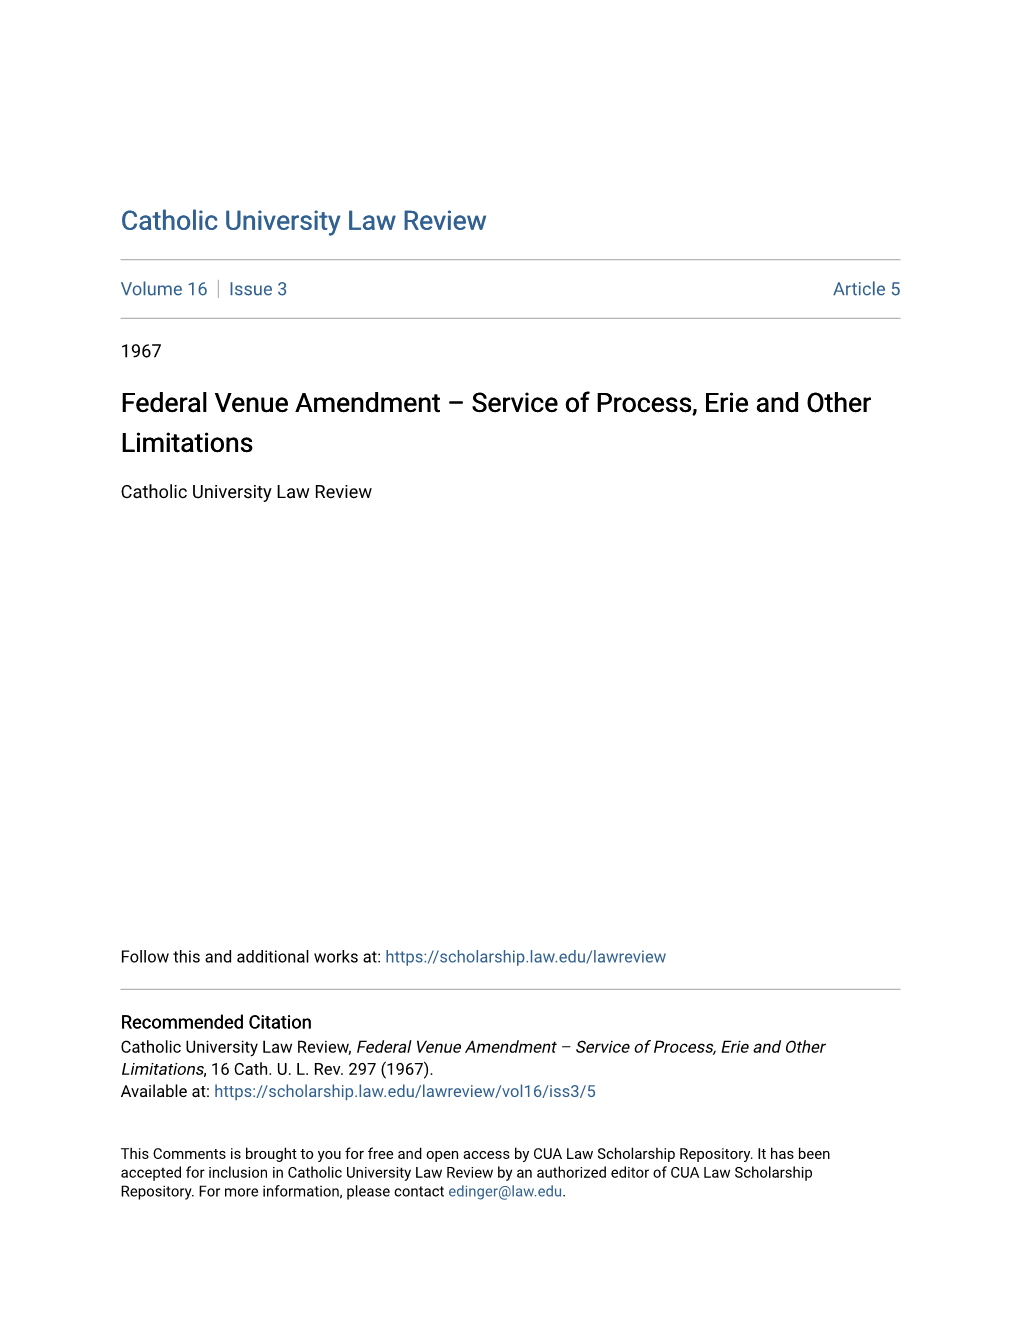 Federal Venue Amendment Â•Fi Service of Process, Erie and Other